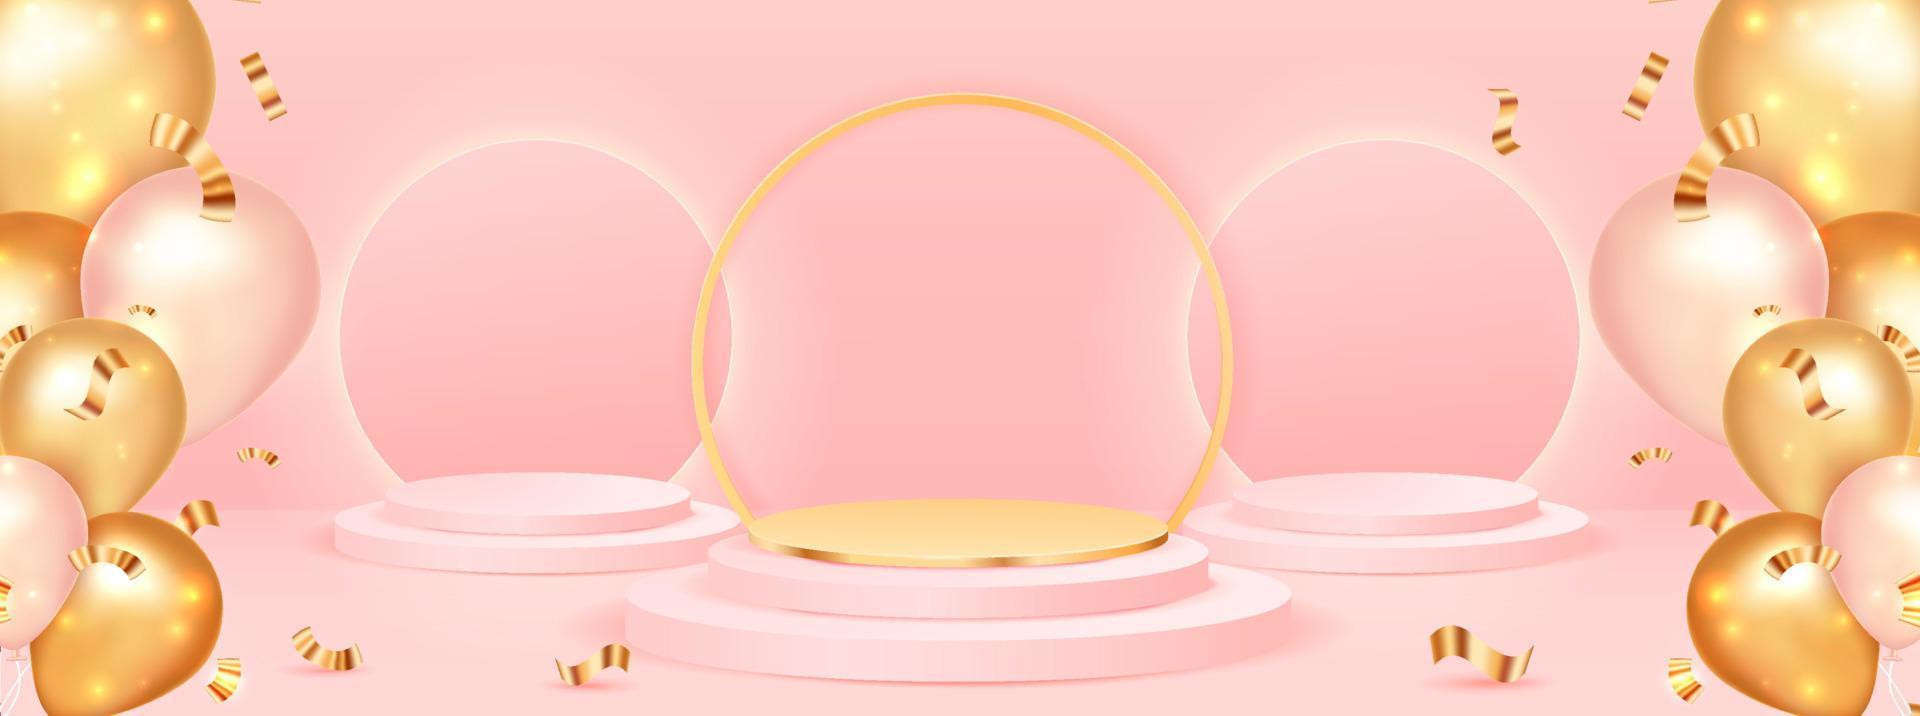 szenenpodium mit goldenen und rosa luftballons. Produktpräsentation, Mock-up. Podium, Siegerpodest oder Podest. Vektor-Illustration vektor